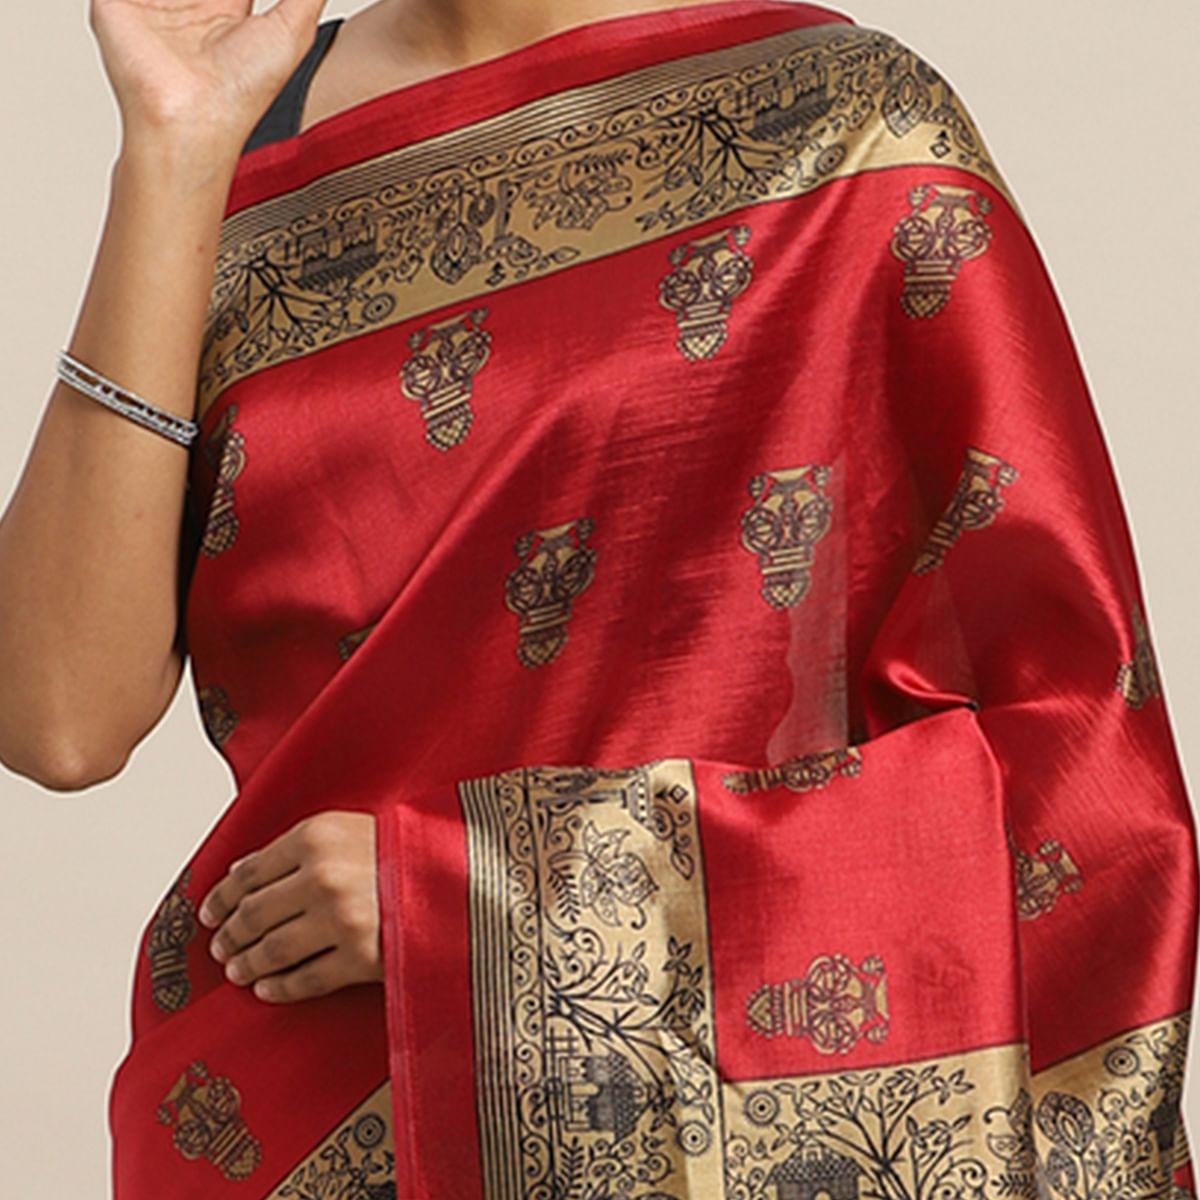 Sensational Red Colored Festive Wear Printed Poly Silk Saree - Peachmode